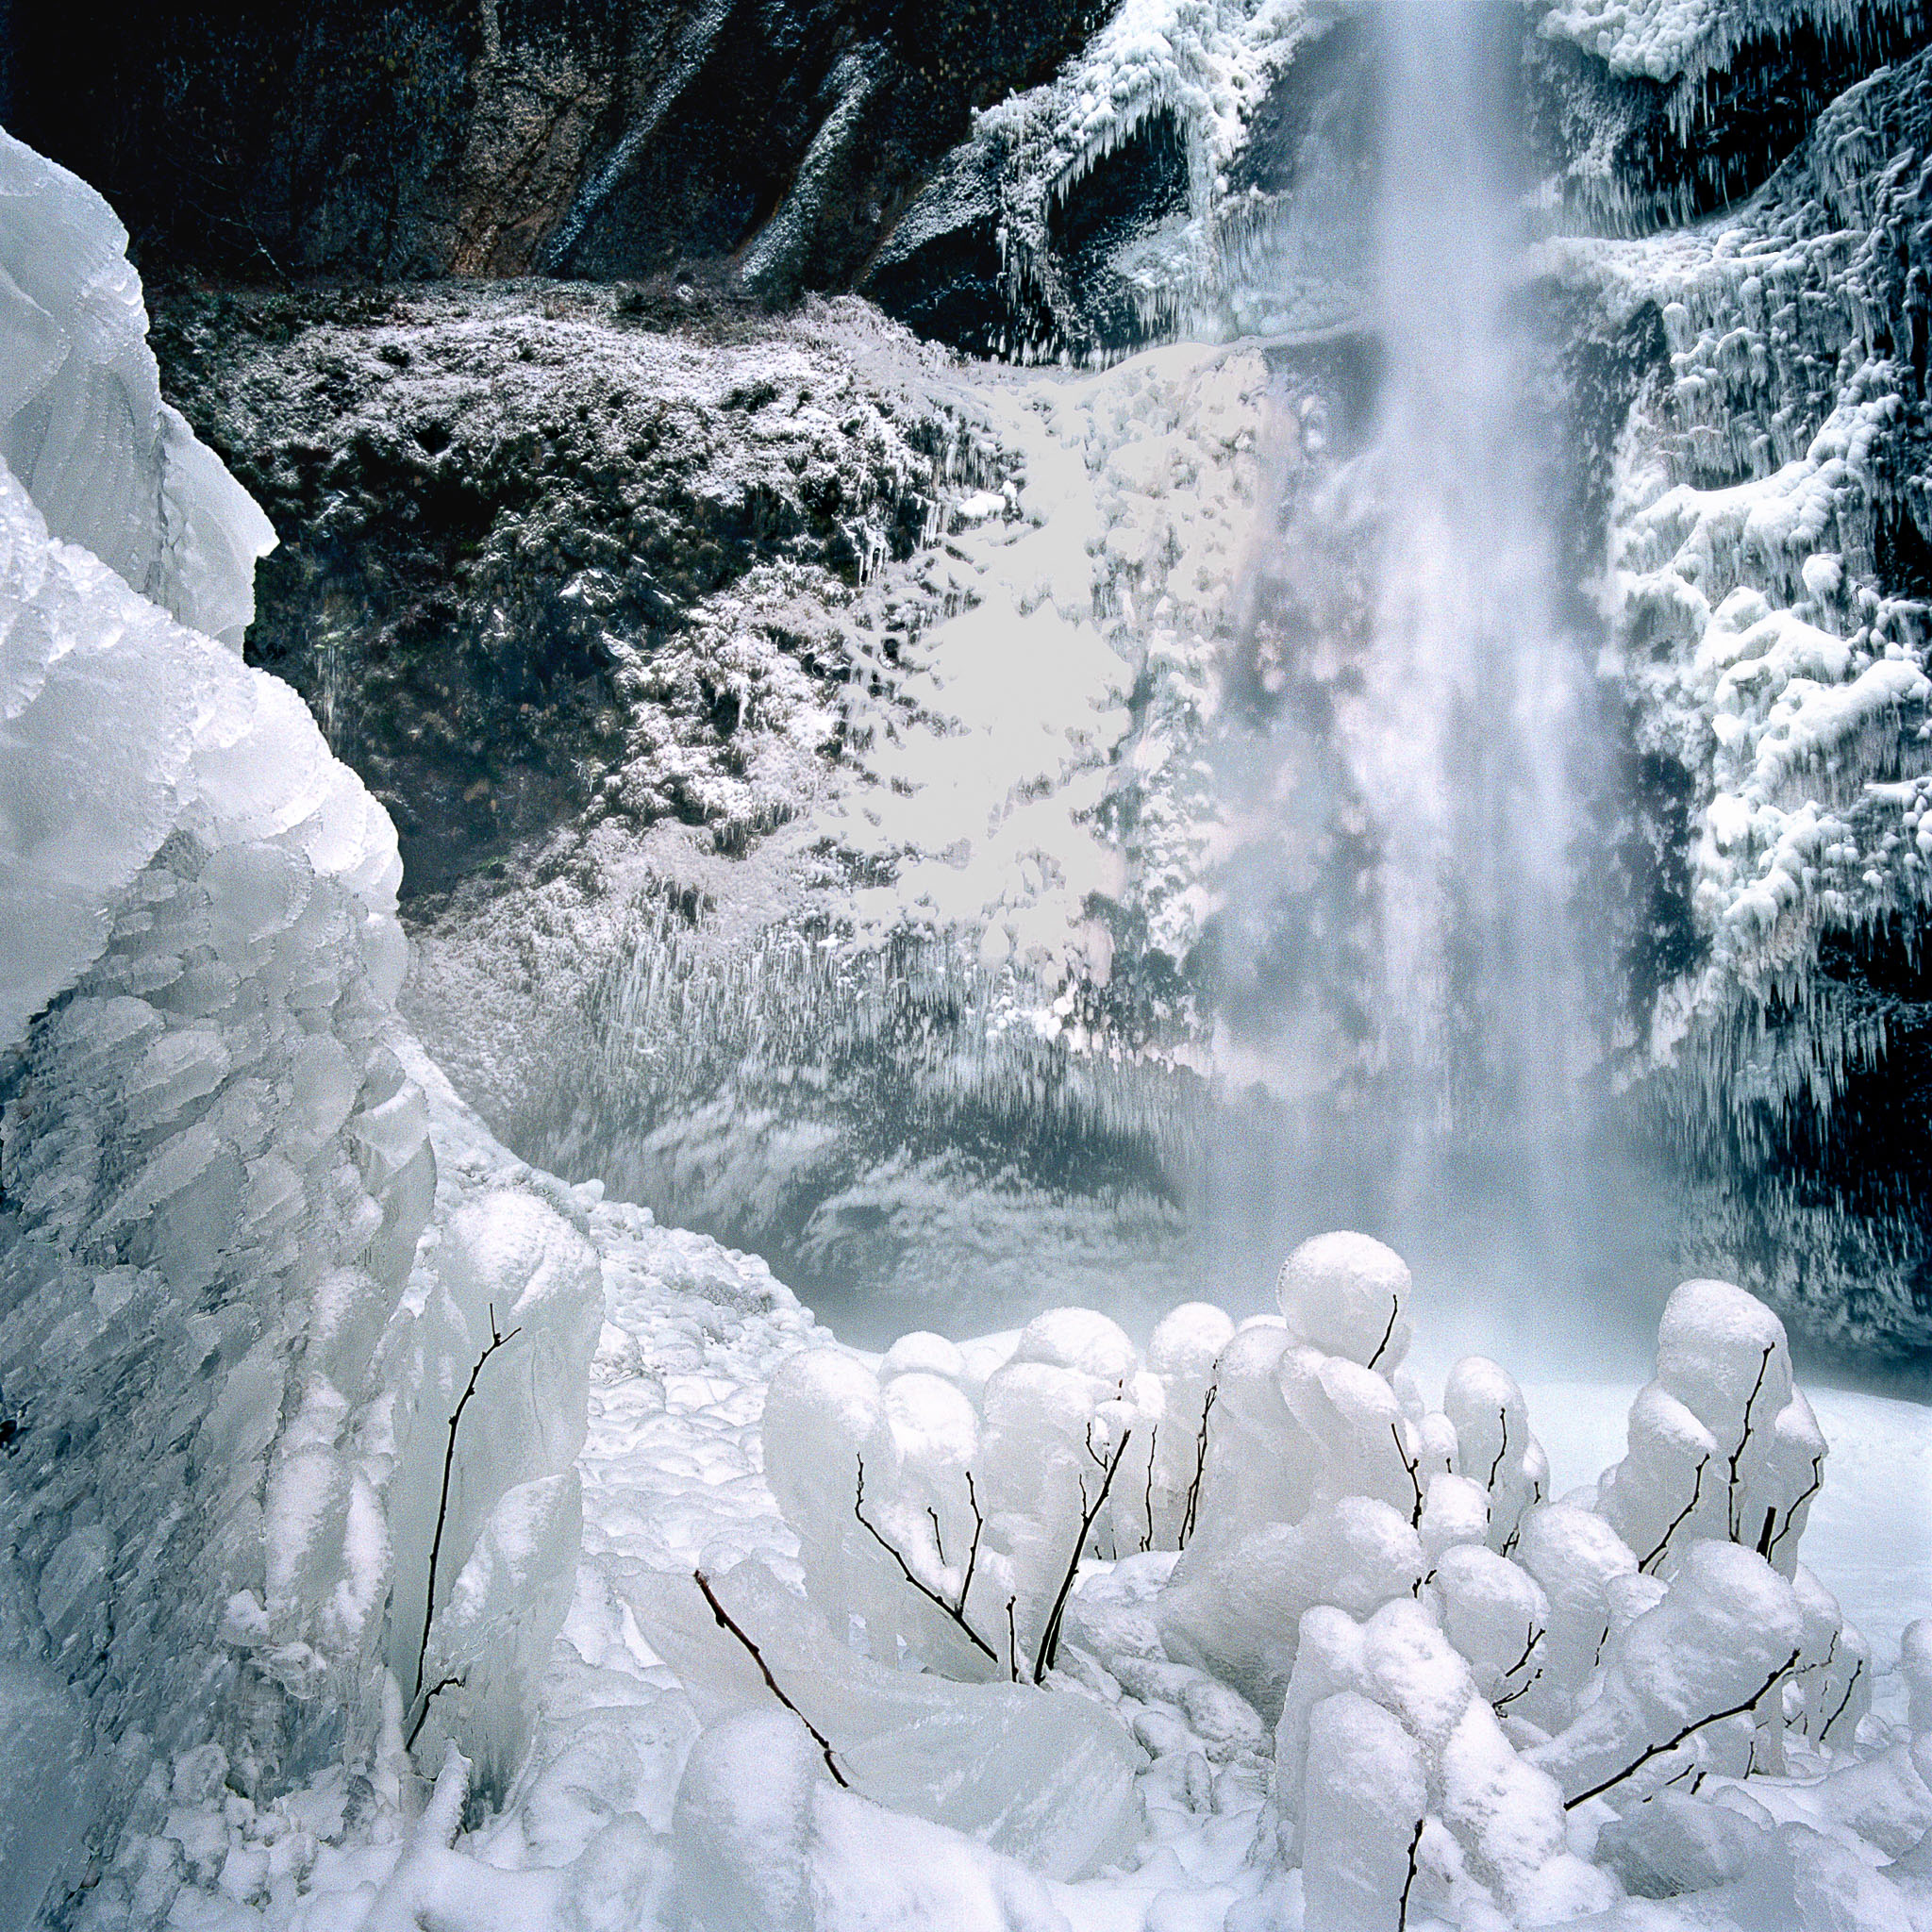 frozen-upper-multnomah-falls-columbia-river-gorge-or-8x8.jpg